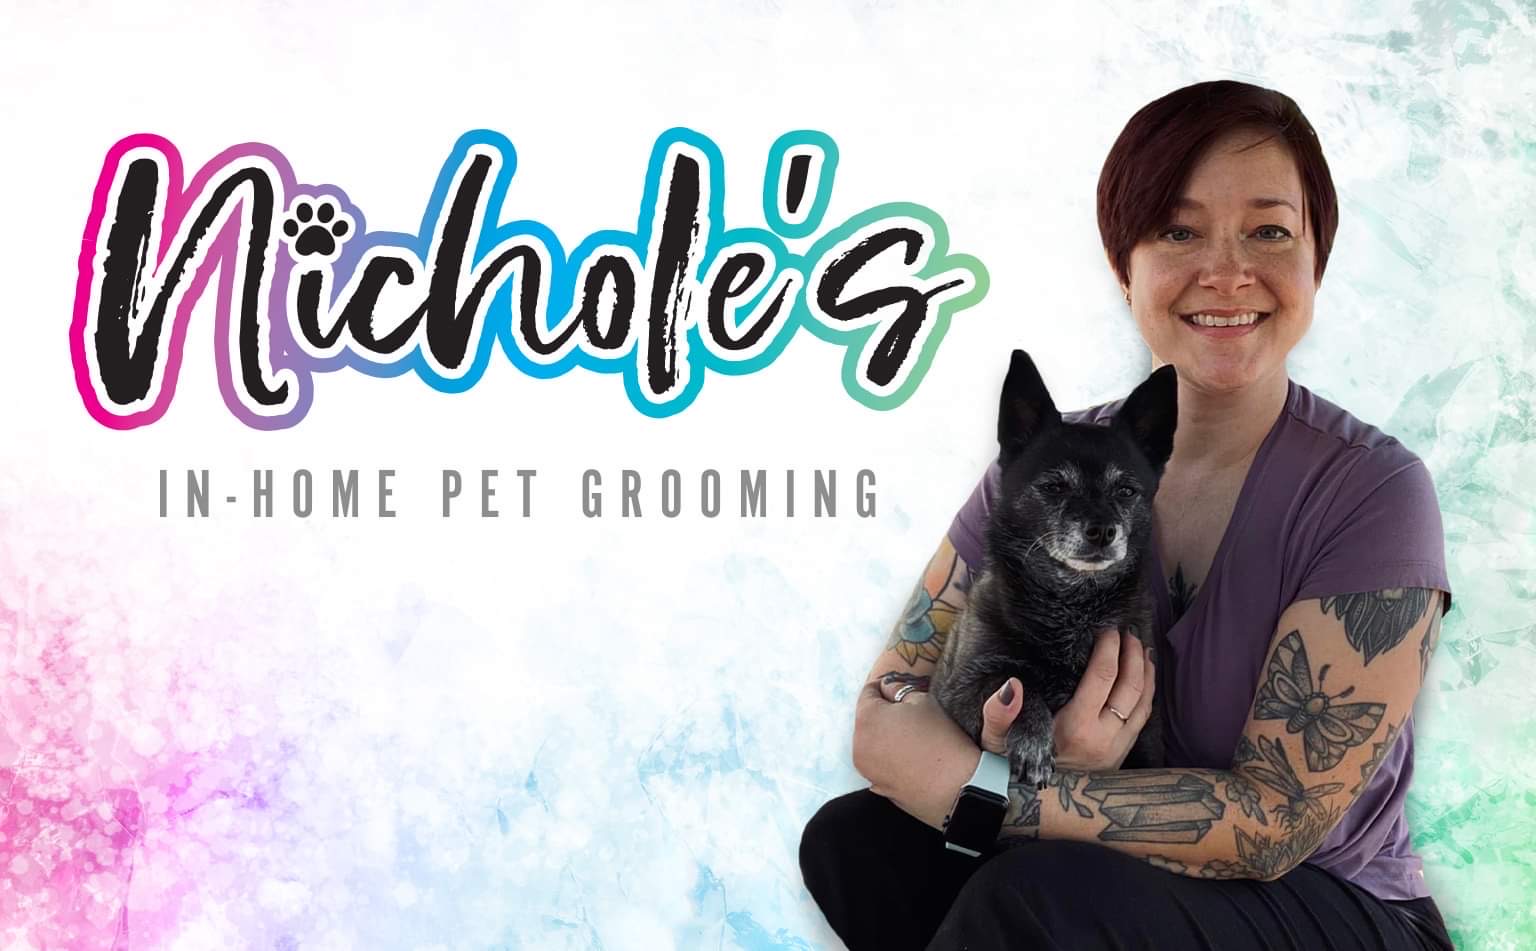 Nichole's in-home pet grooming